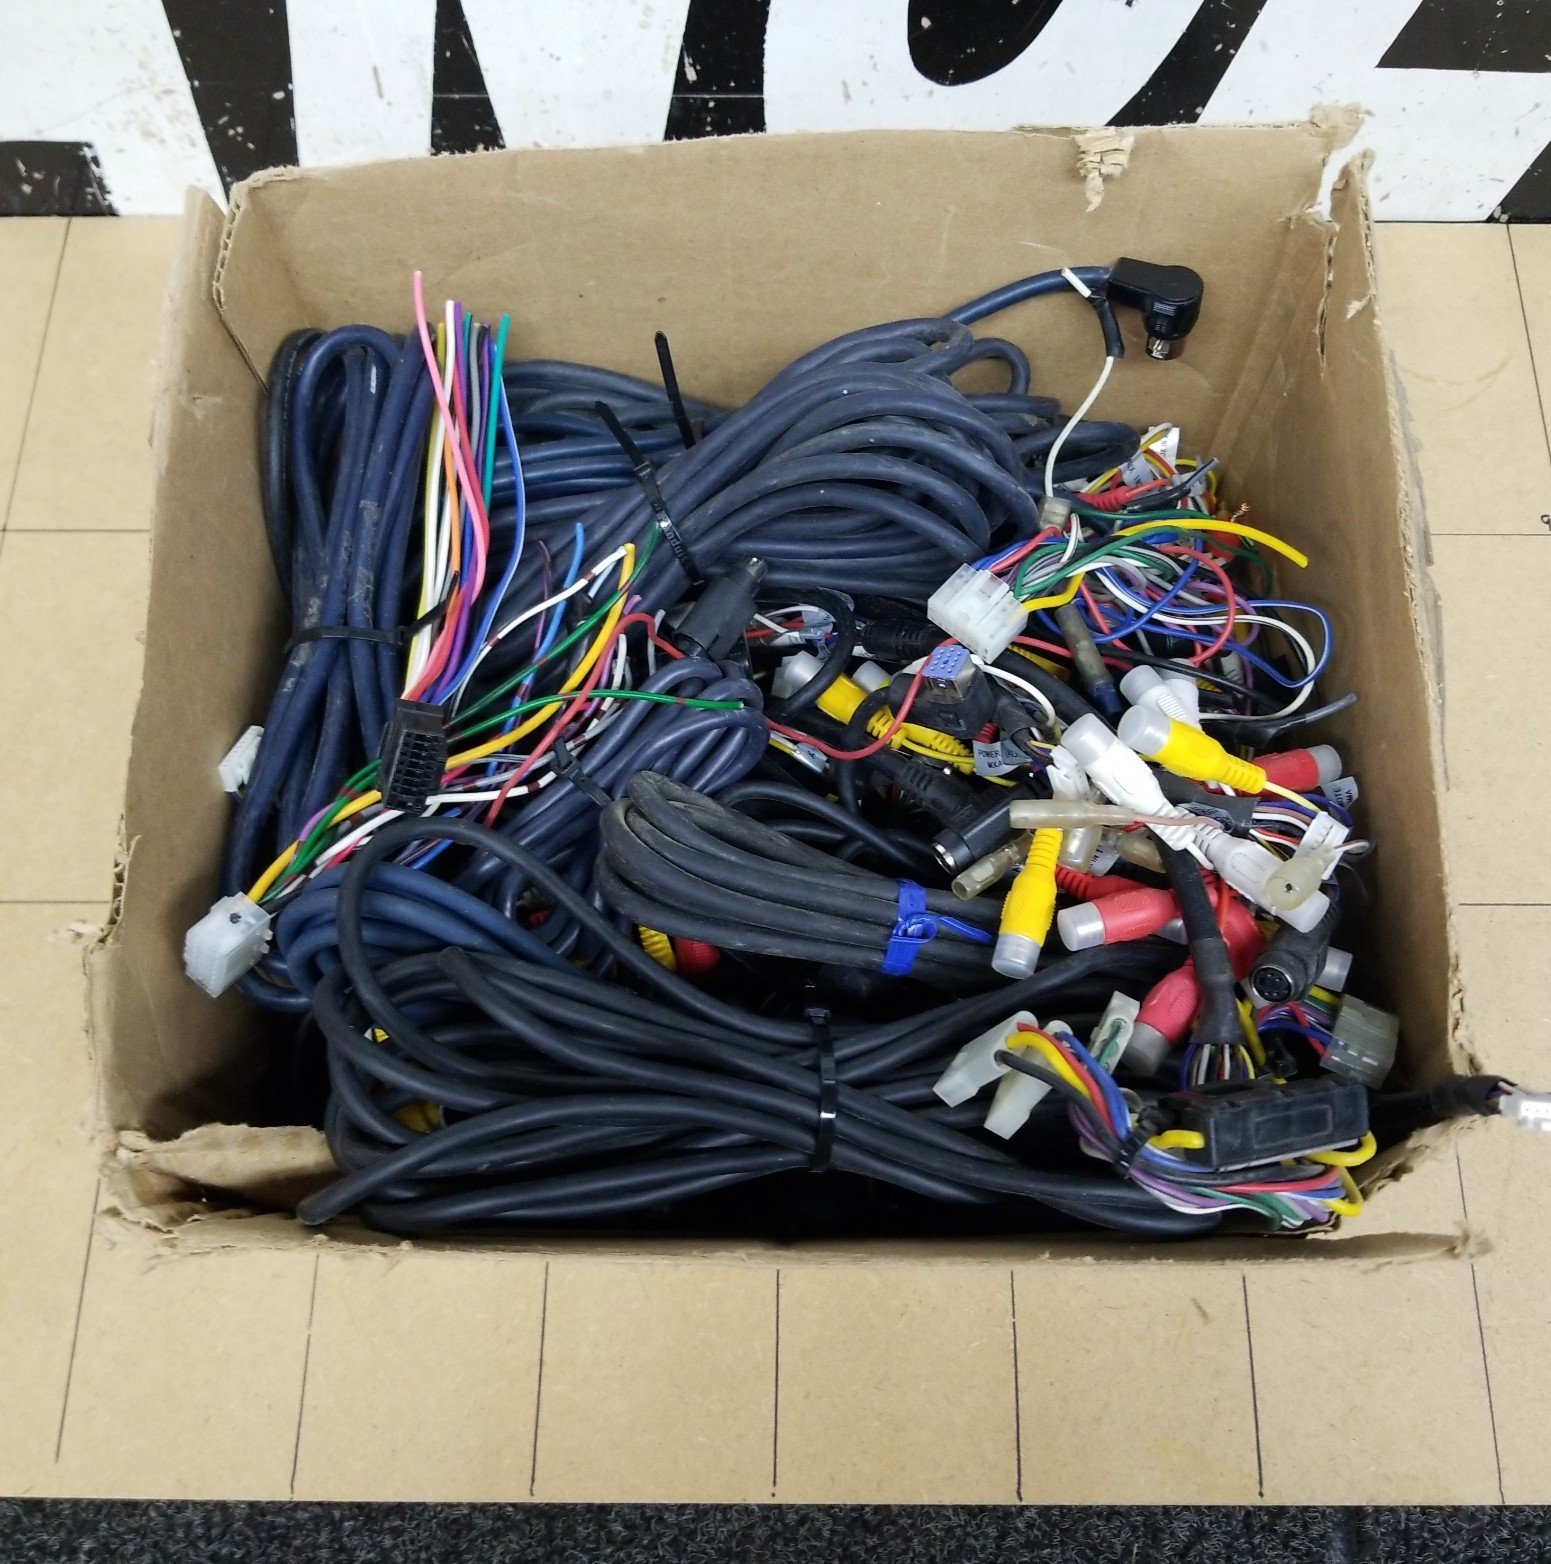 Box of random alpine wires. FALb99jUW